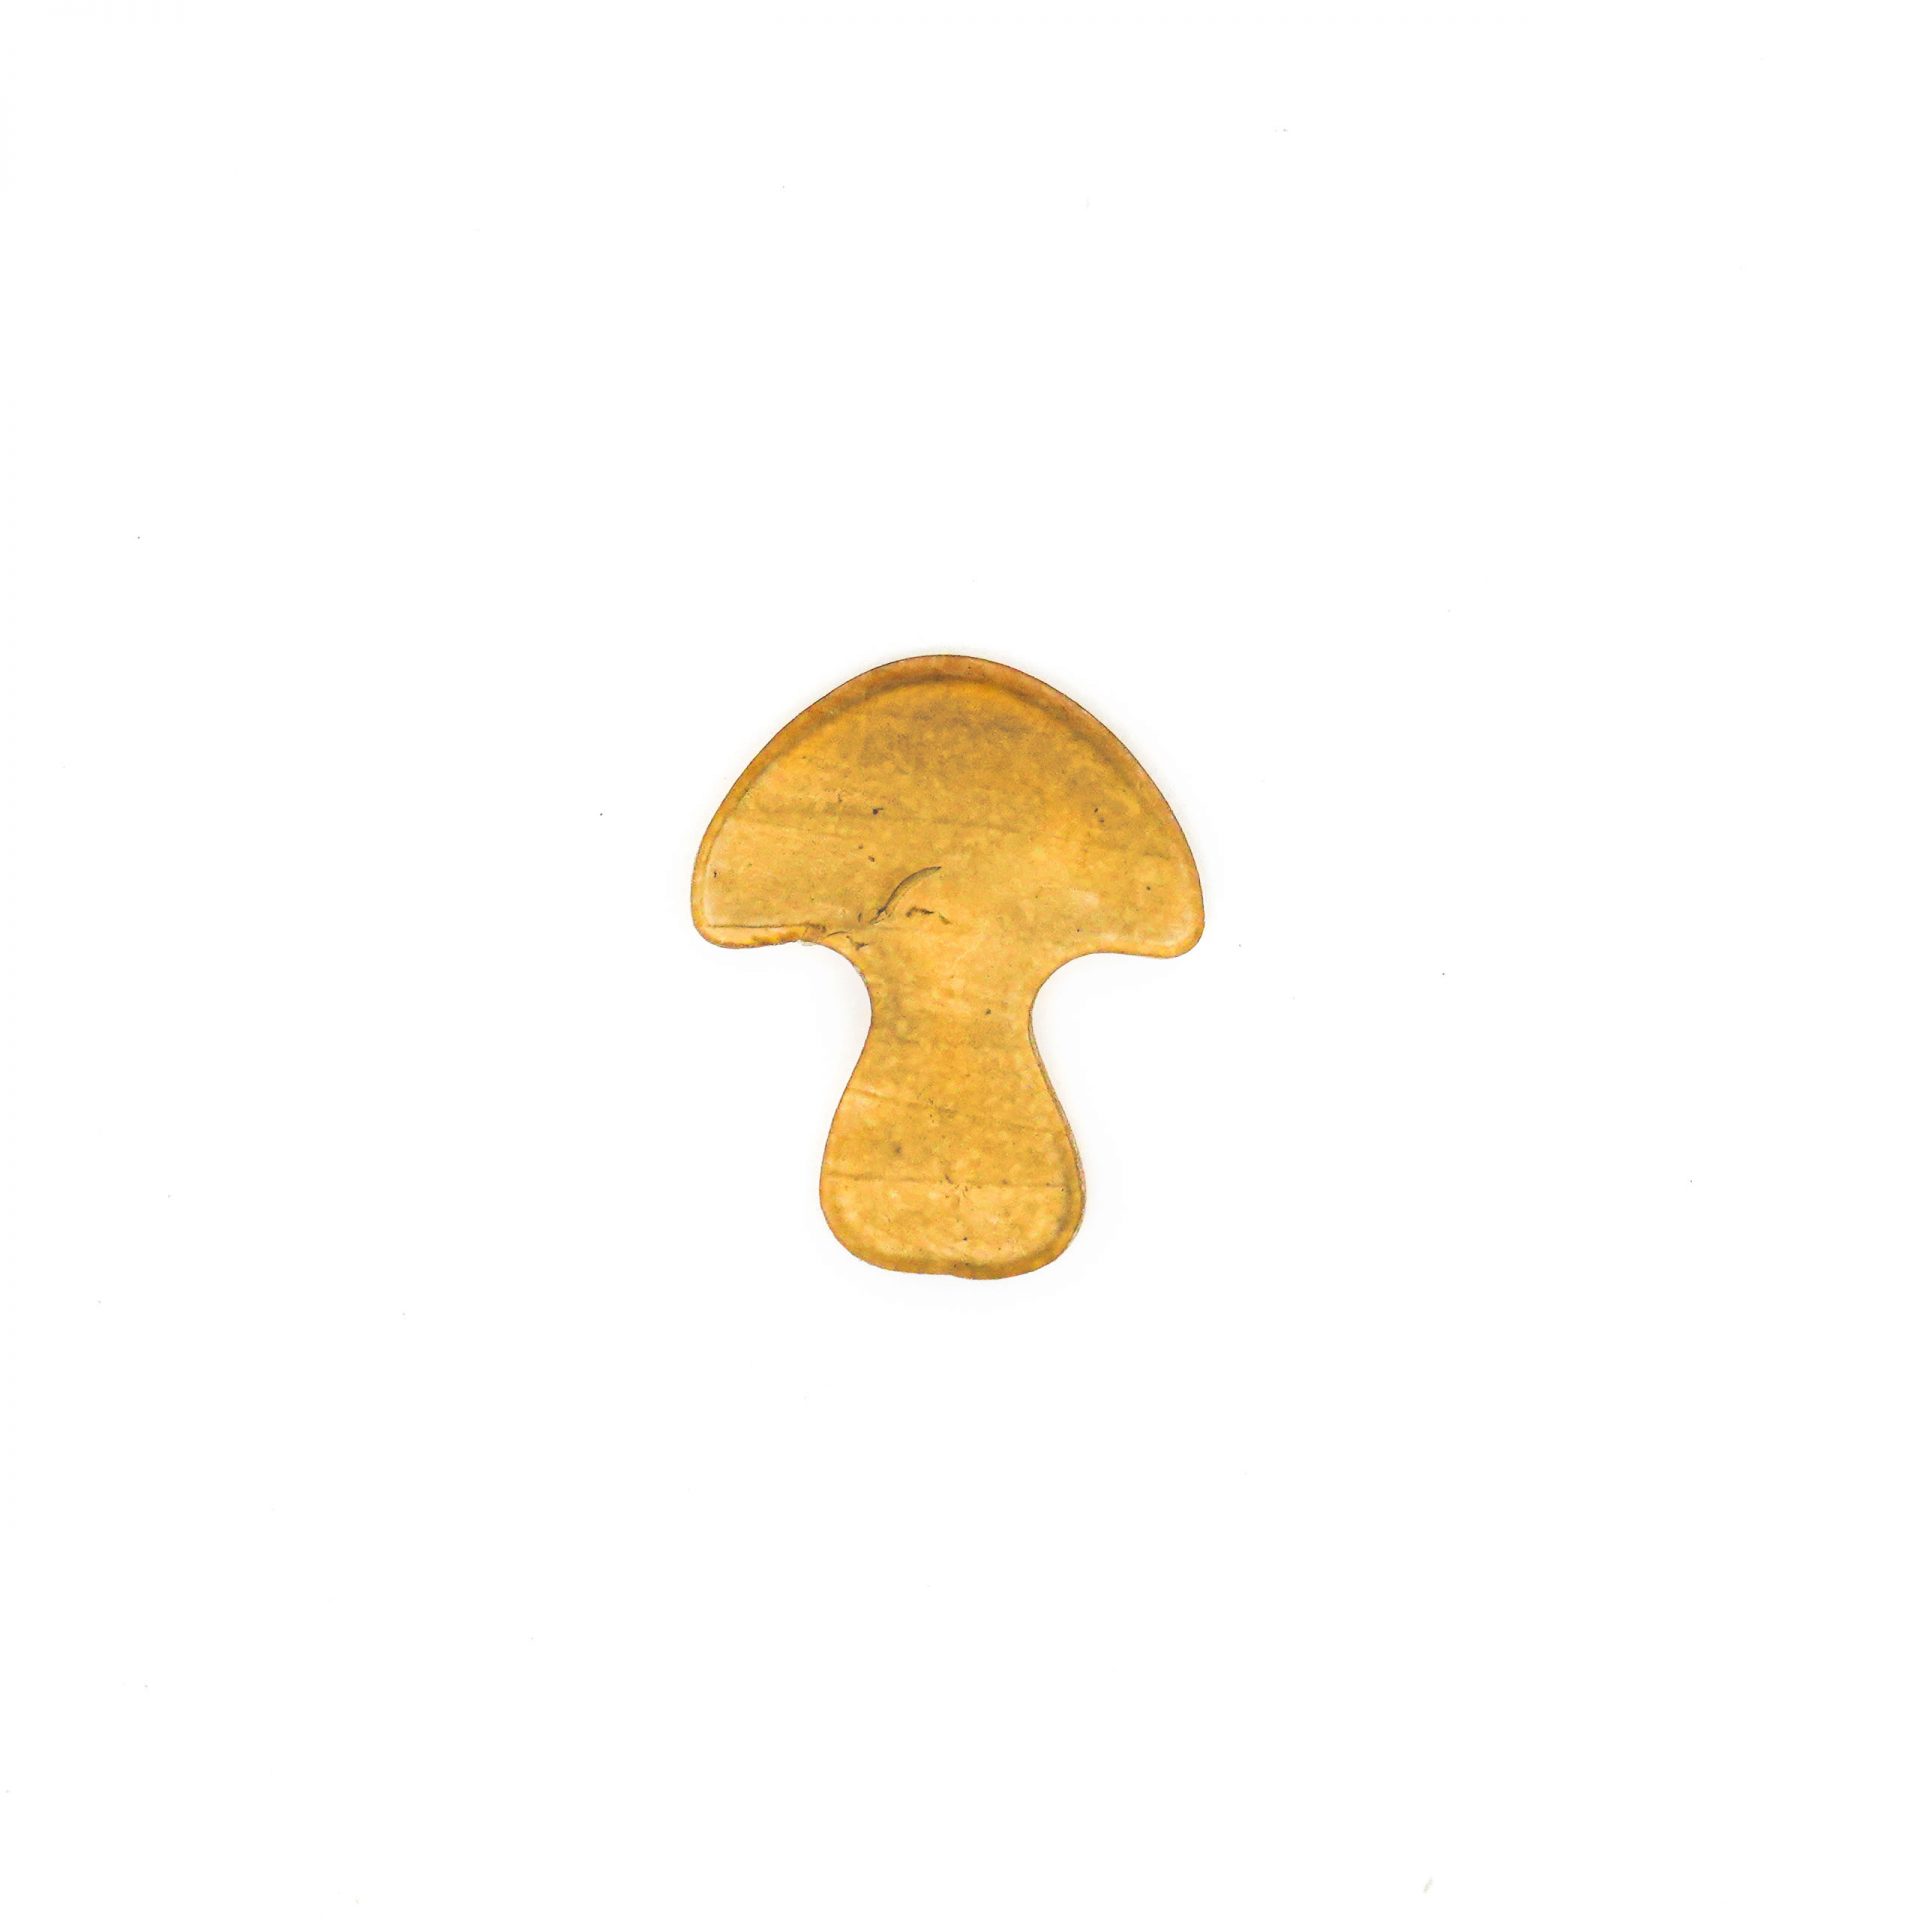 Recipe development mushrooms as a snack